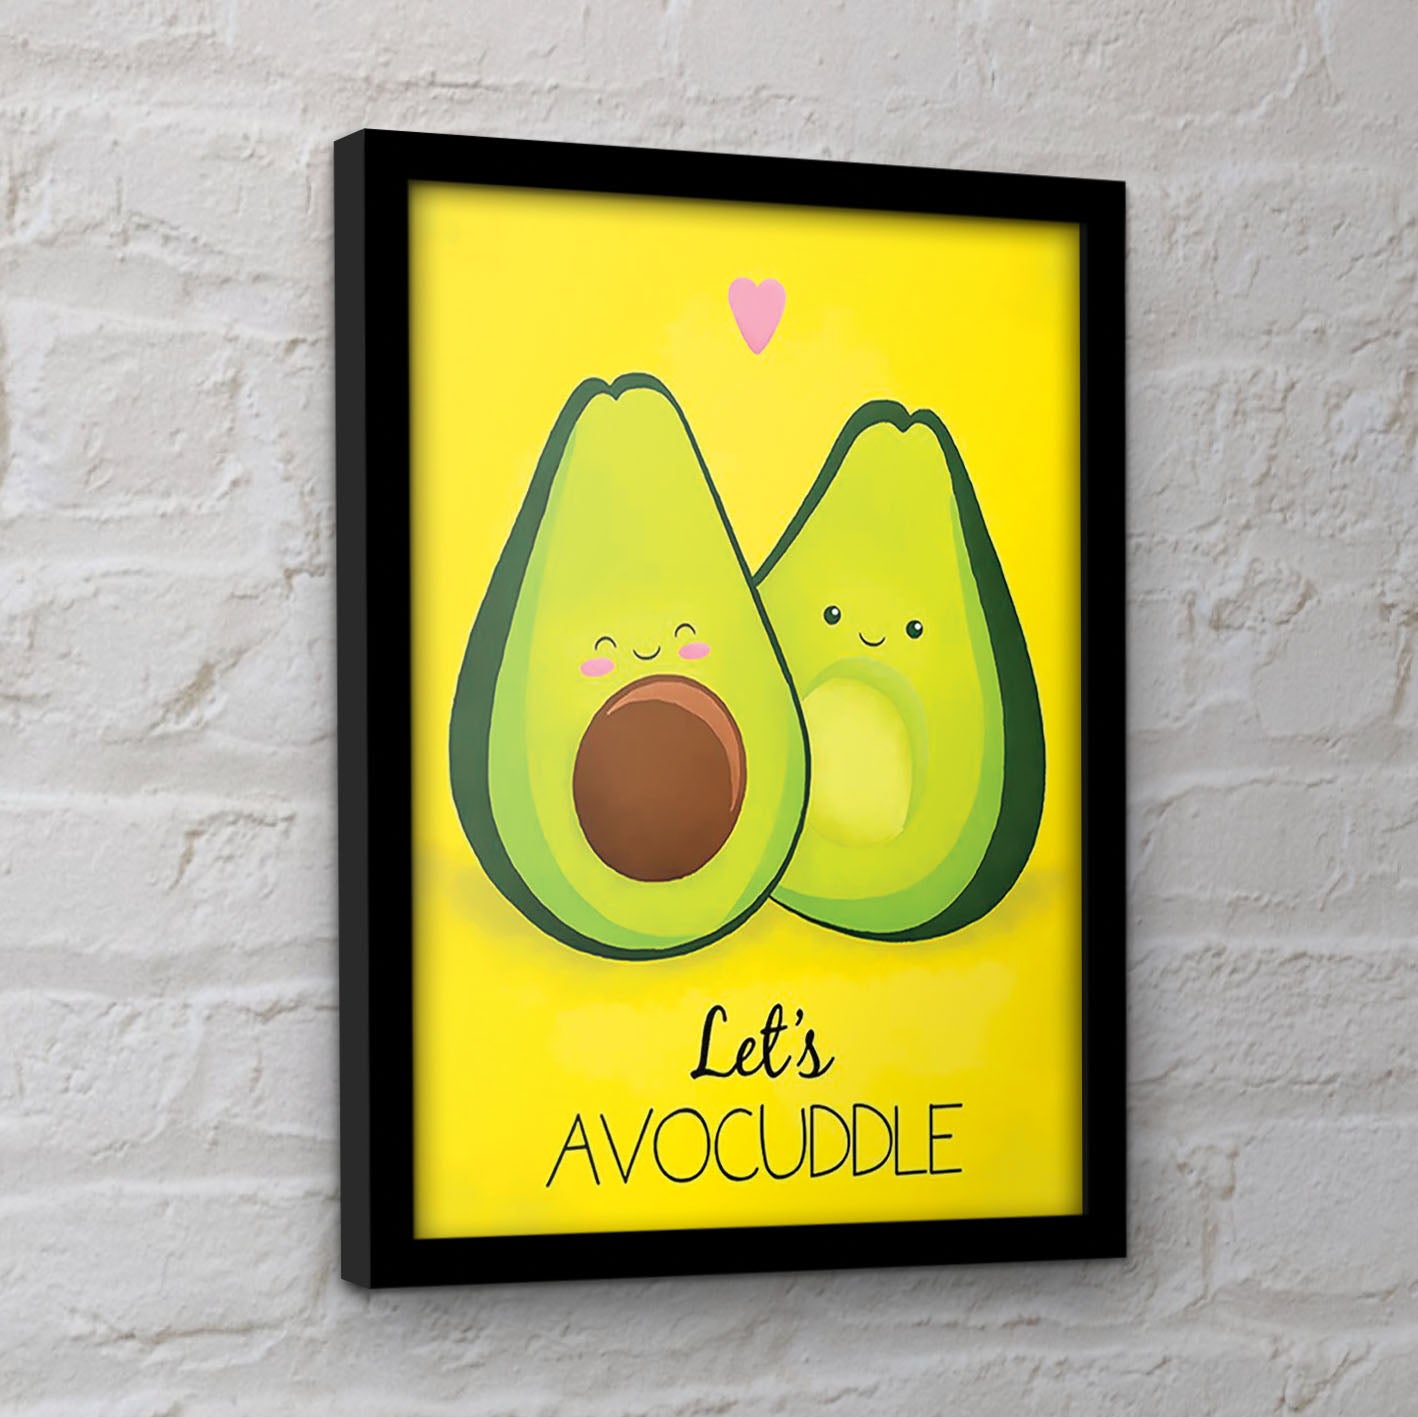 Avocado (Lets Avocuddle) – International Pyramid